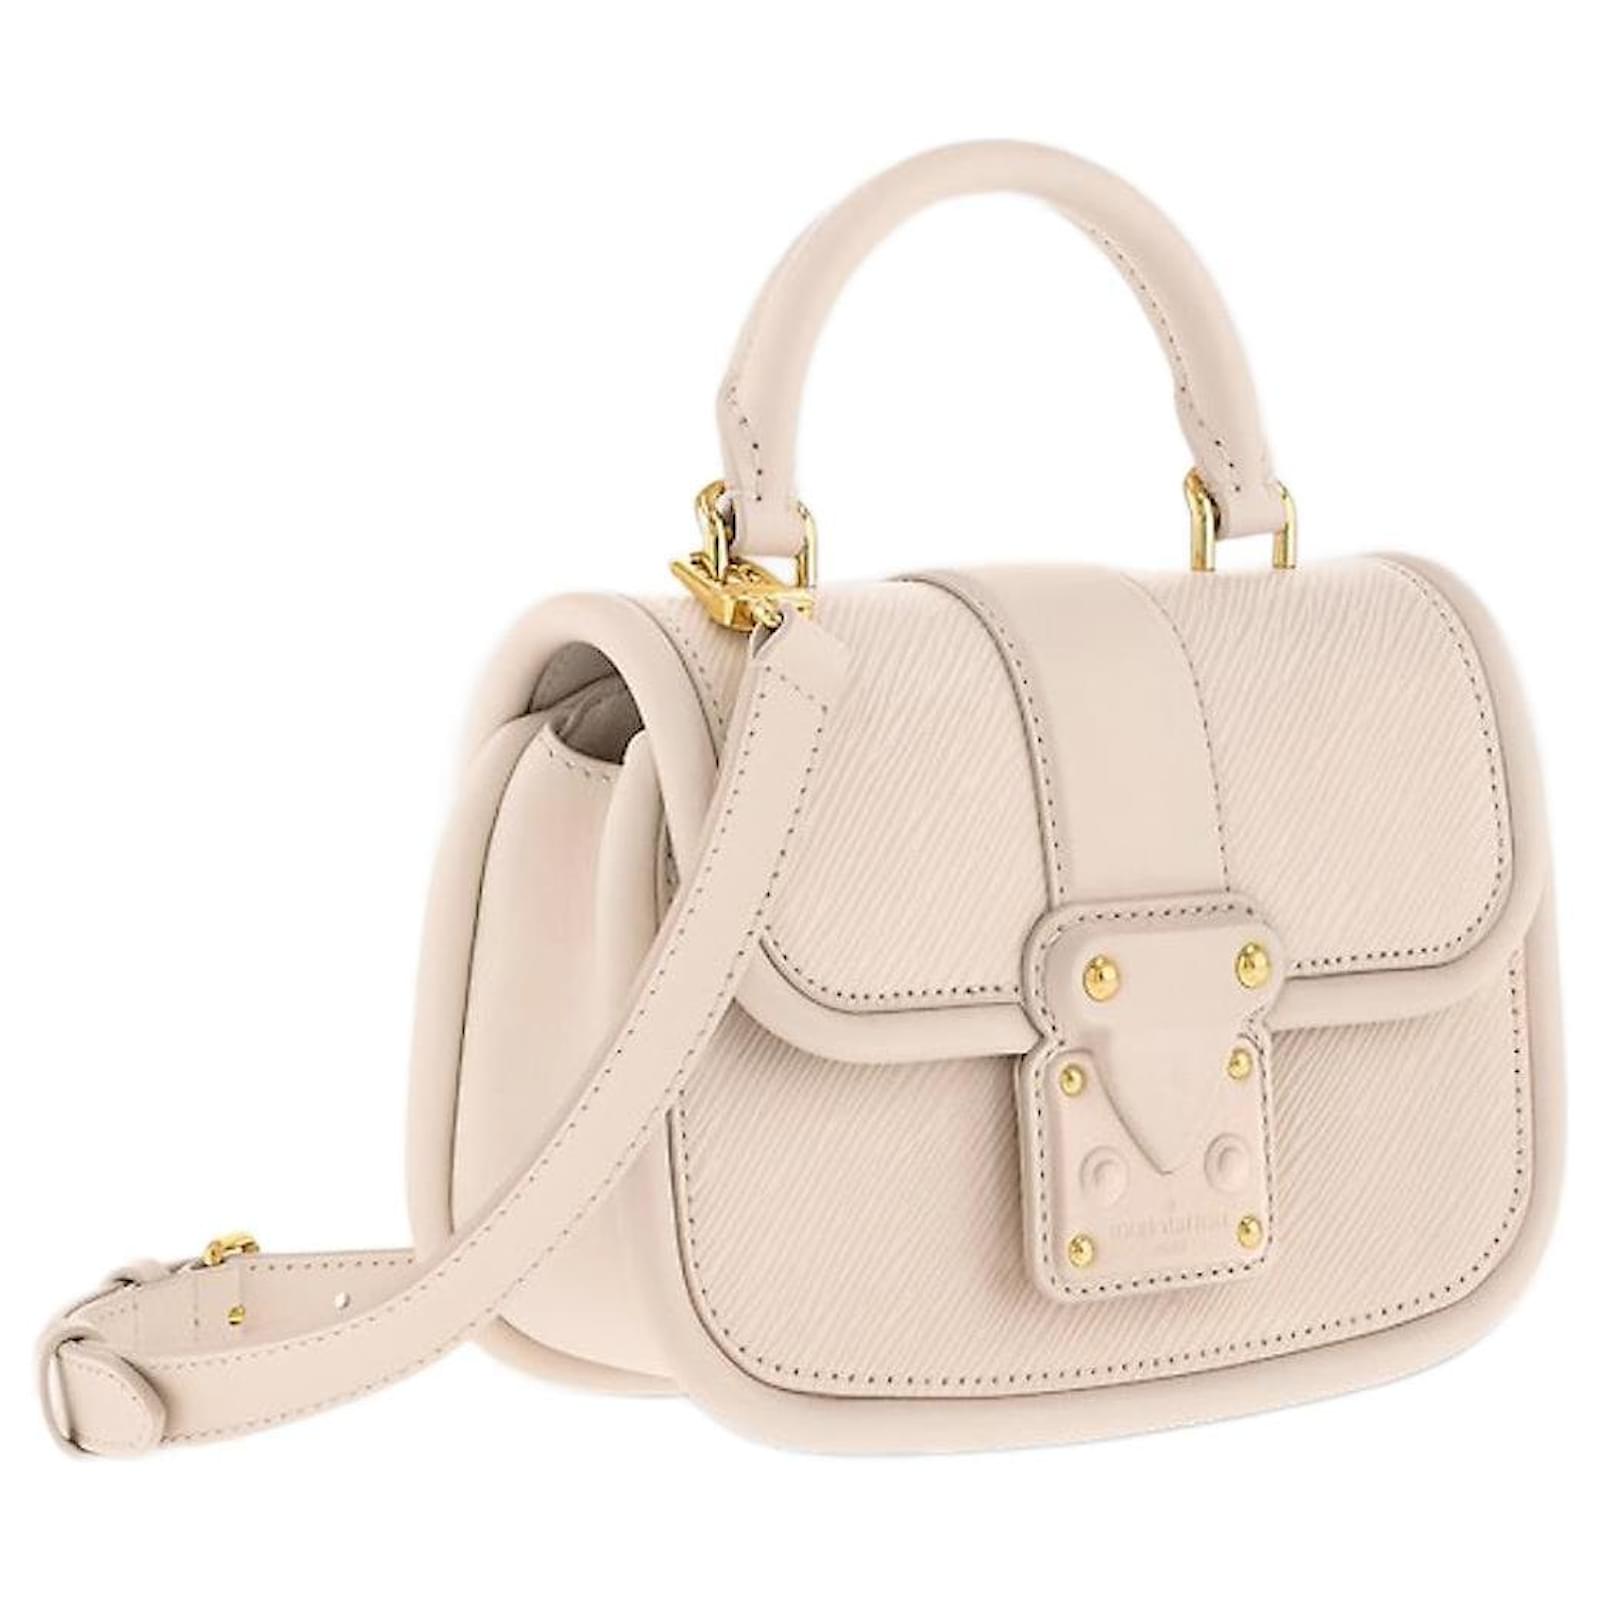 Handbags Louis Vuitton LV Hide and Seek Handbag New